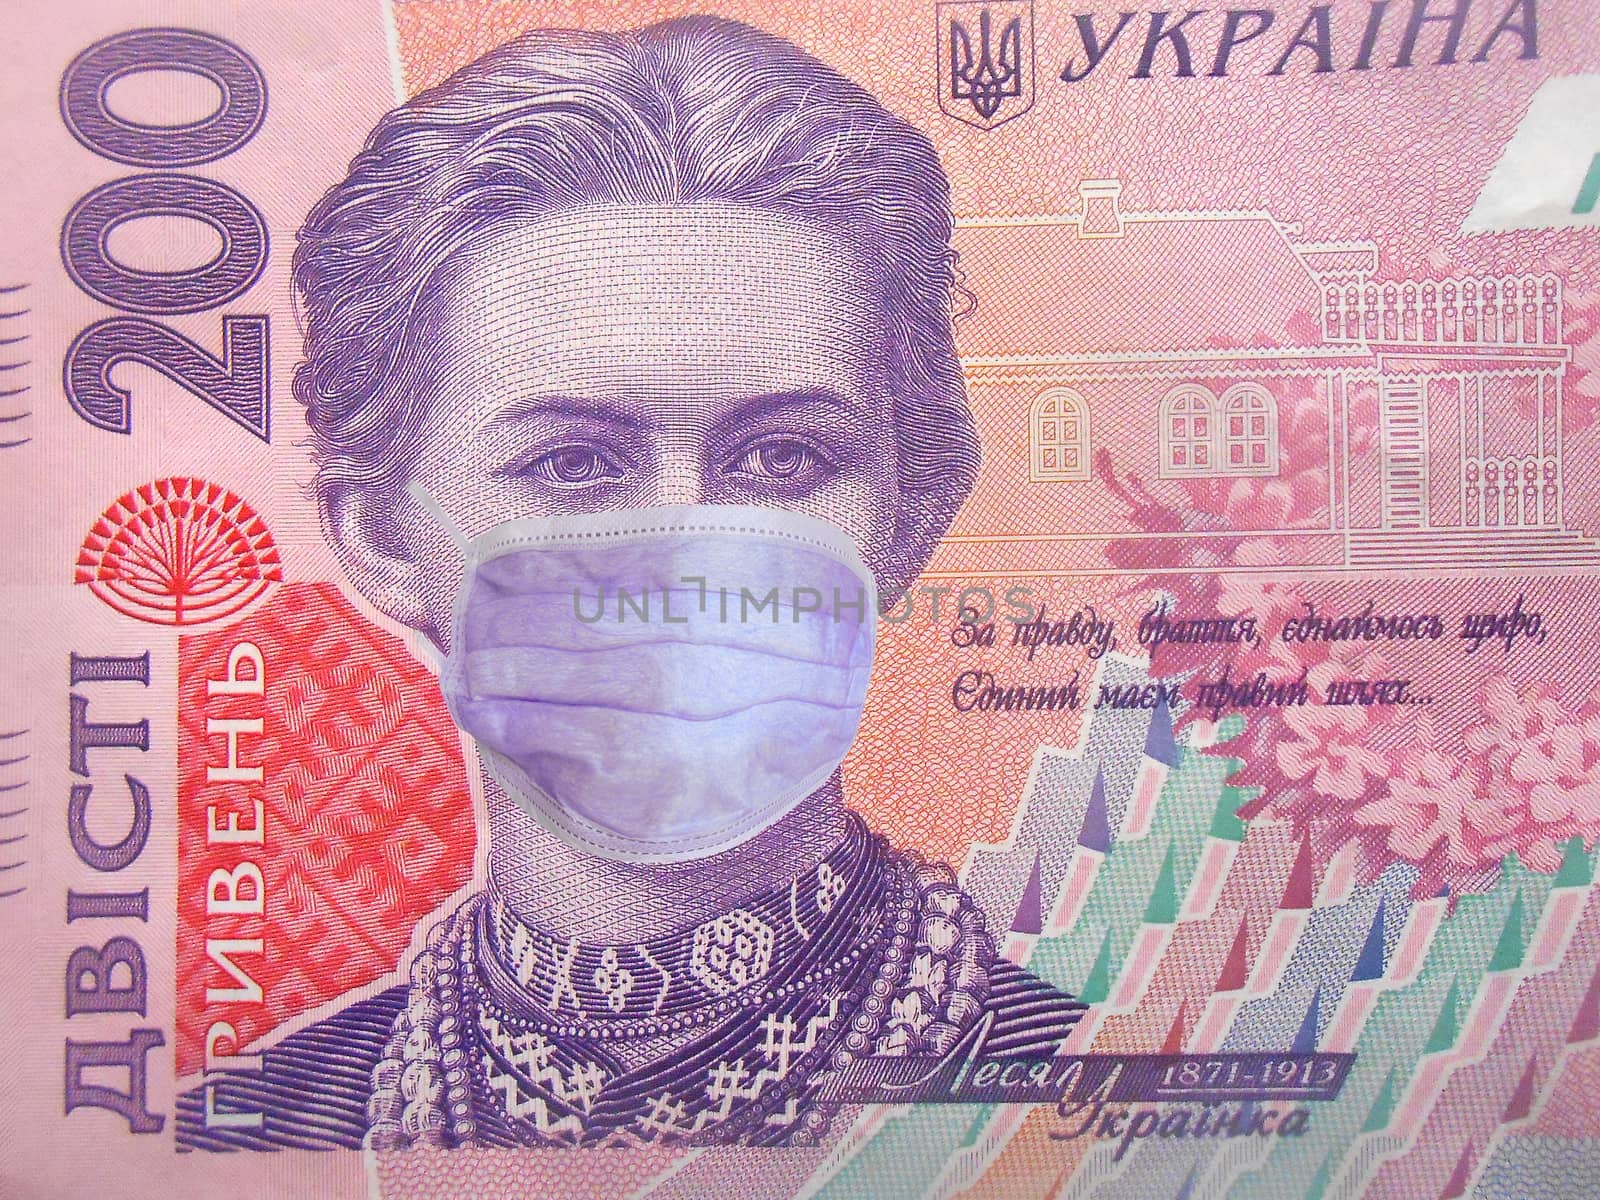 Coronavirus COVID-19 in Ukraine. 200 ukrainian money hryvnia money bill with face mask. World economy hit by corona virus outbreak and pandemic fears. Coronavirus affects global stock market. Finance and crisis concept.